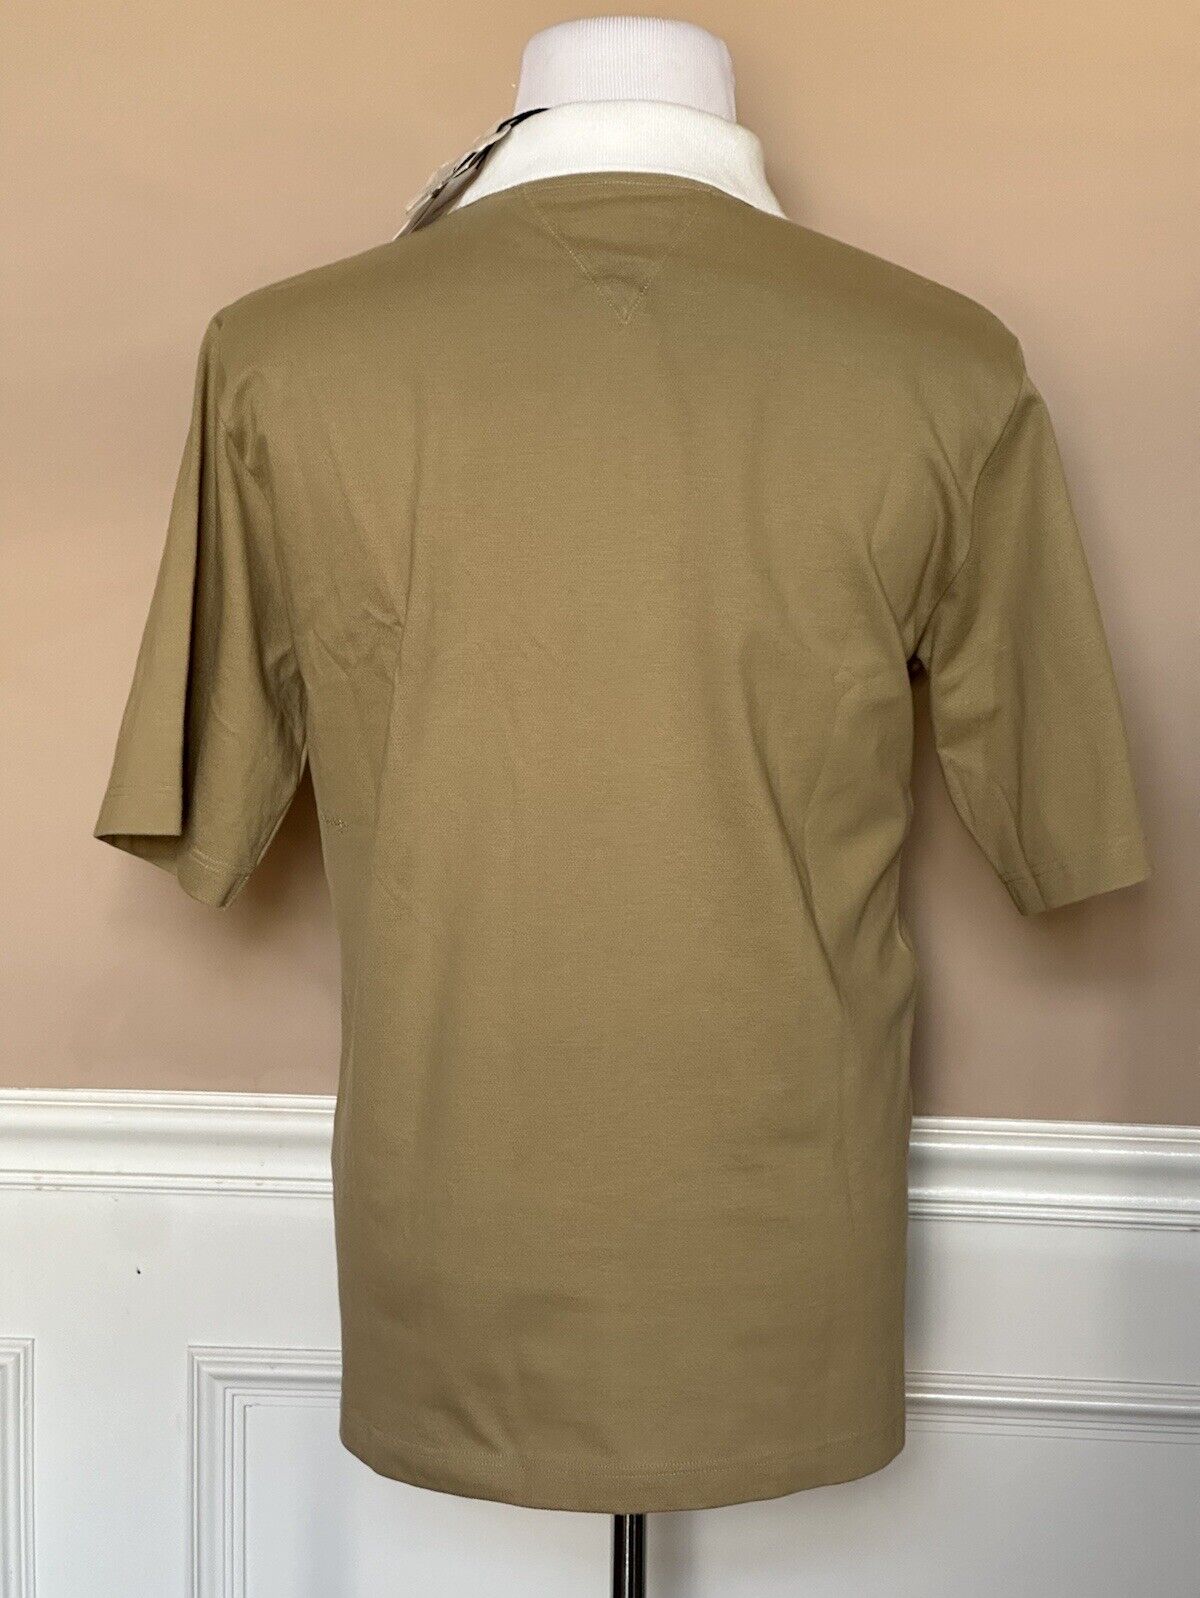 Мужская хлопковая рубашка-поло пике Bottega Veneta, размер S (размер оверсайз), 704205, NWT, 700 долларов США 